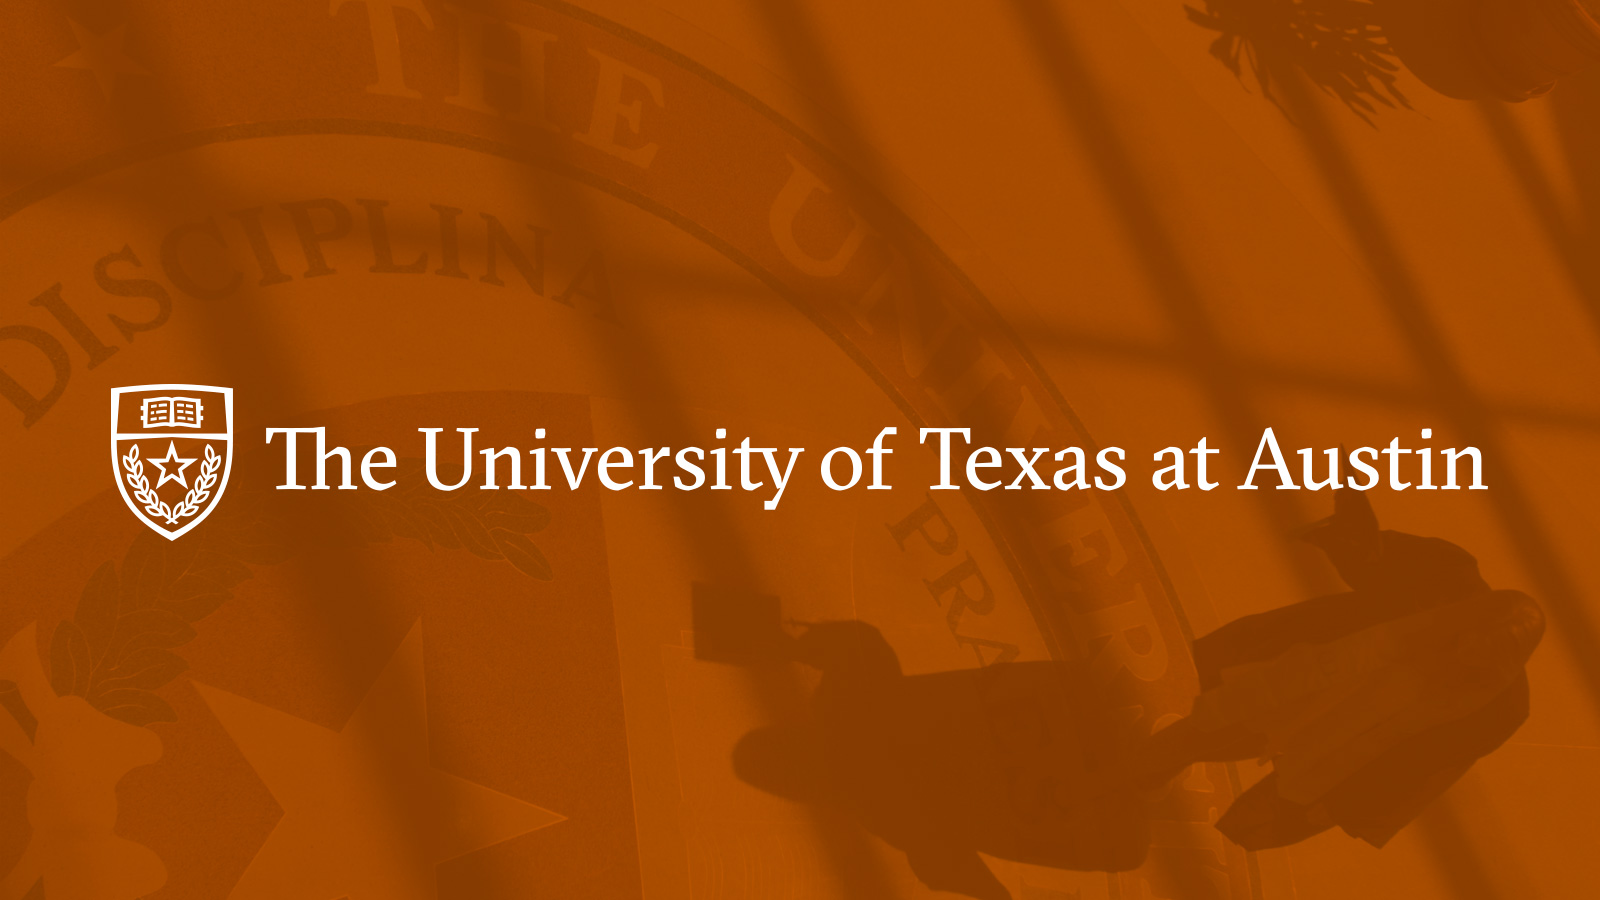 University Of Texas Wallpapers - Wallpaper Zone